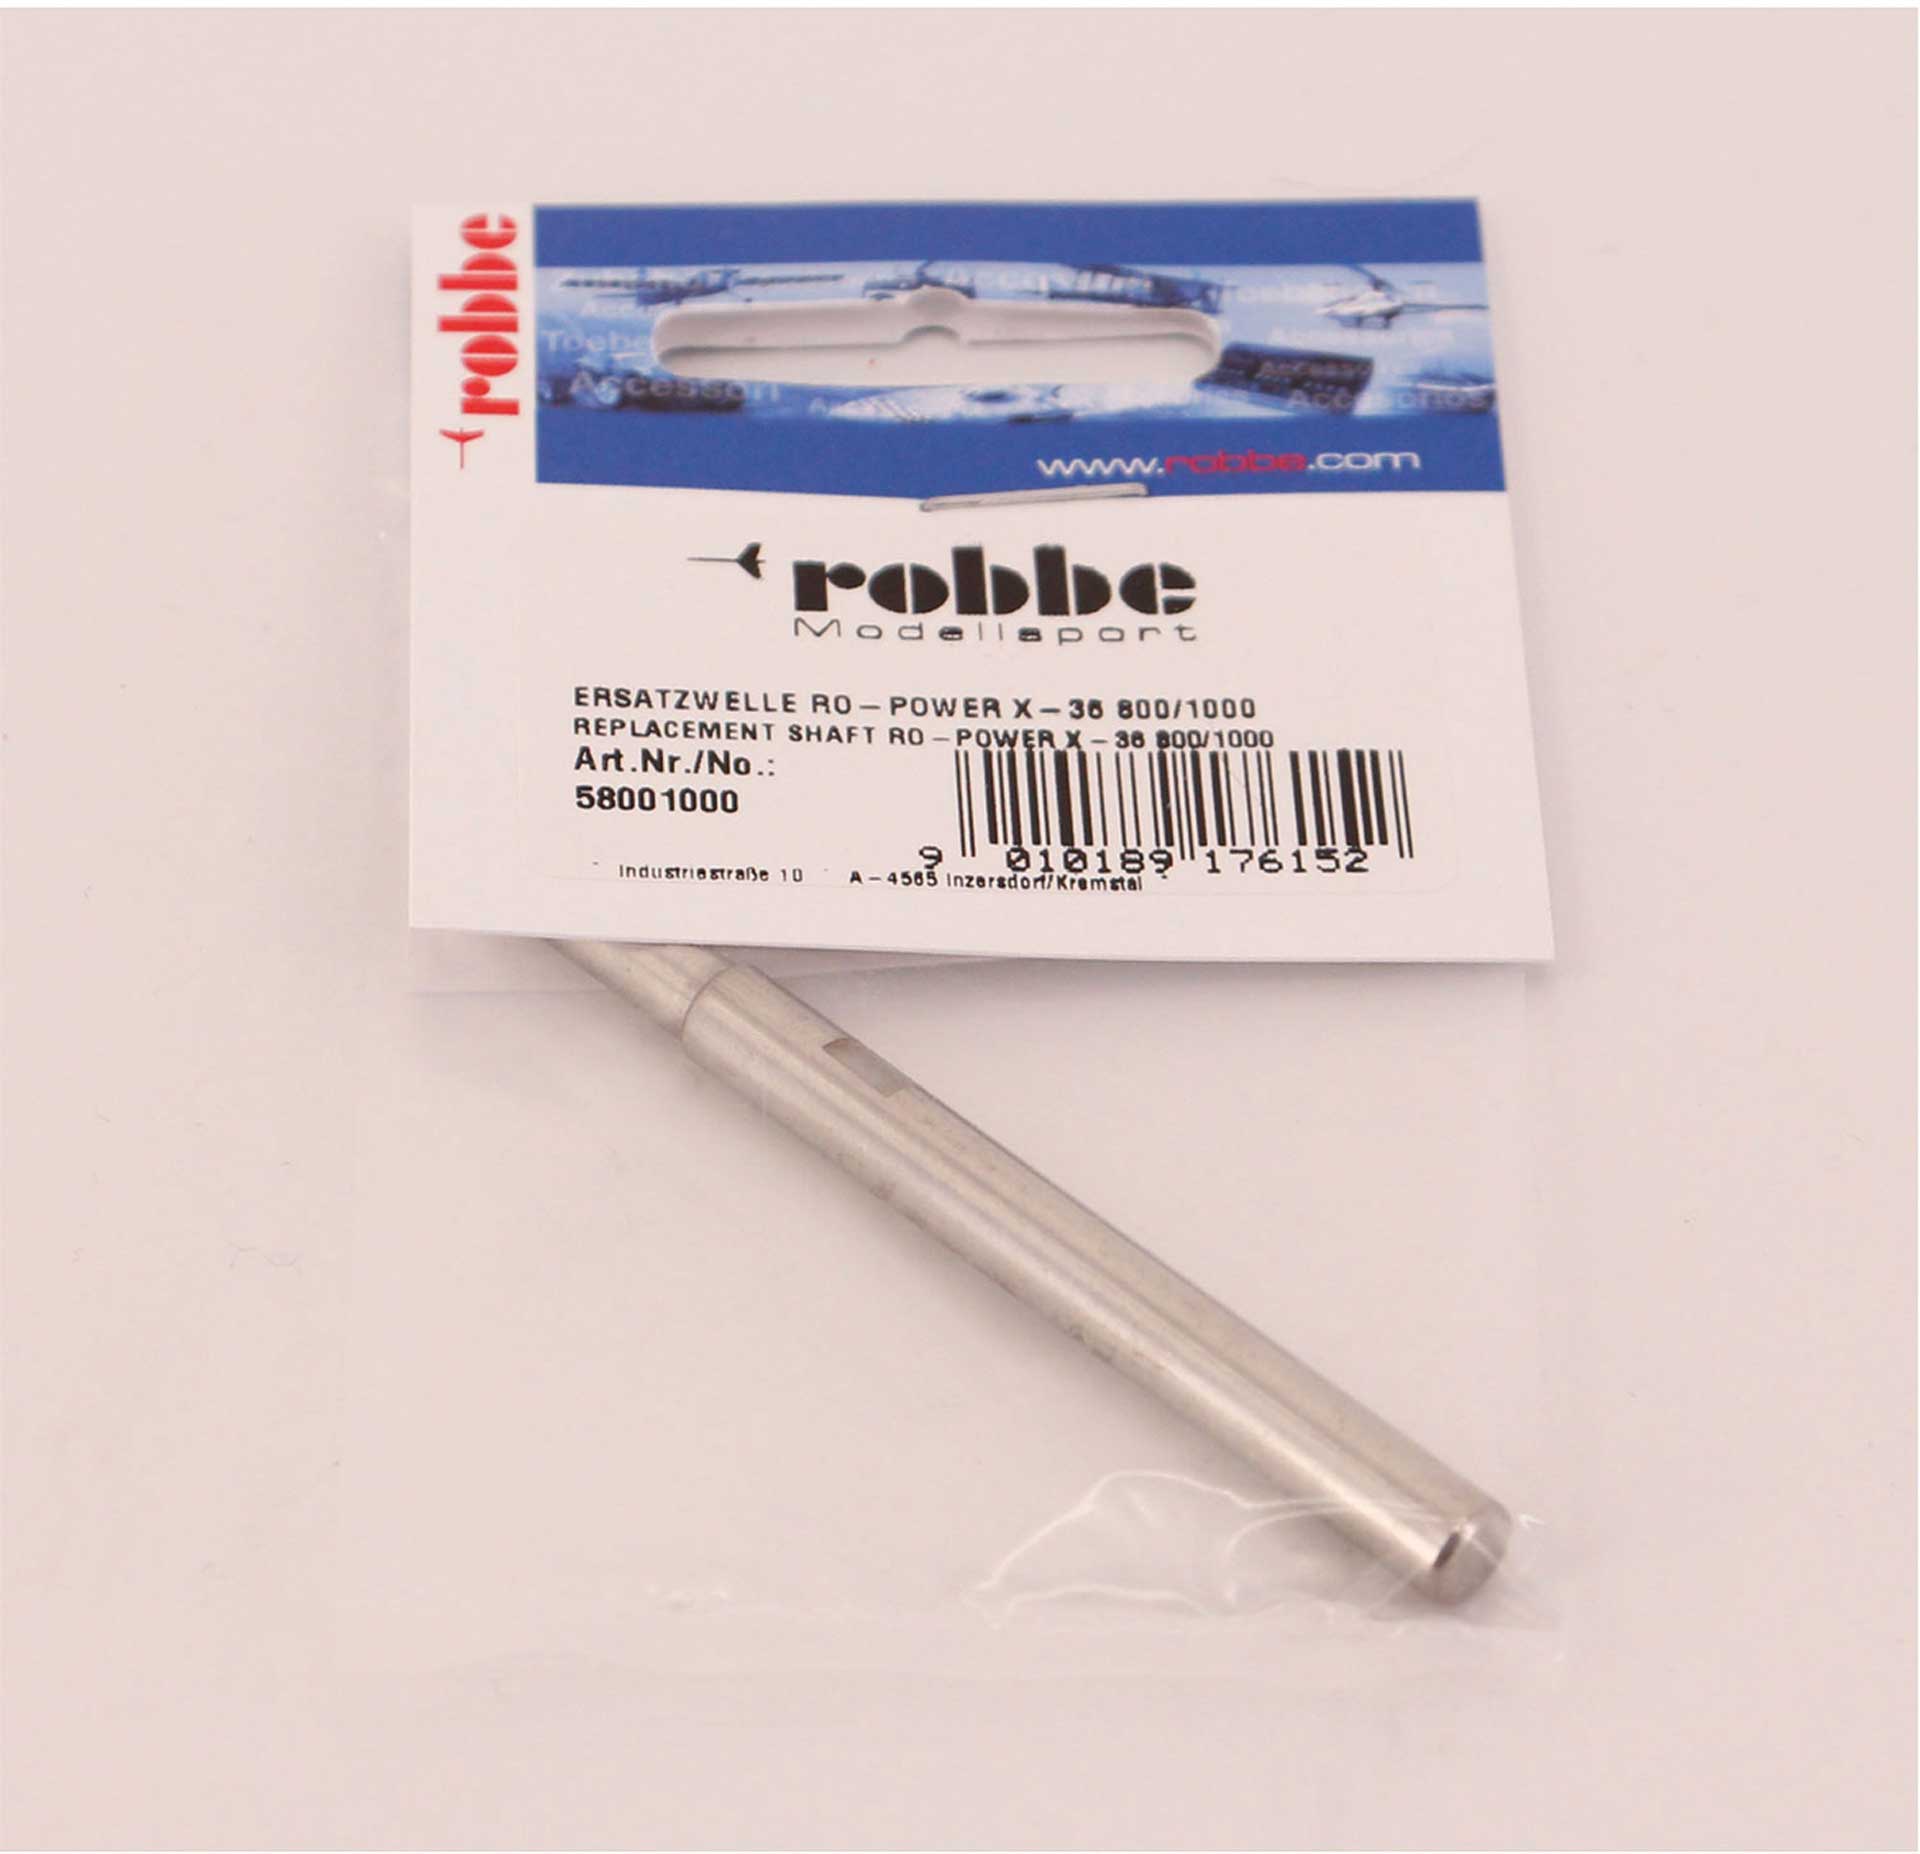 Robbe Modellsport ERSATZWELLE RO-POWER TORQUE X-36 800/1000